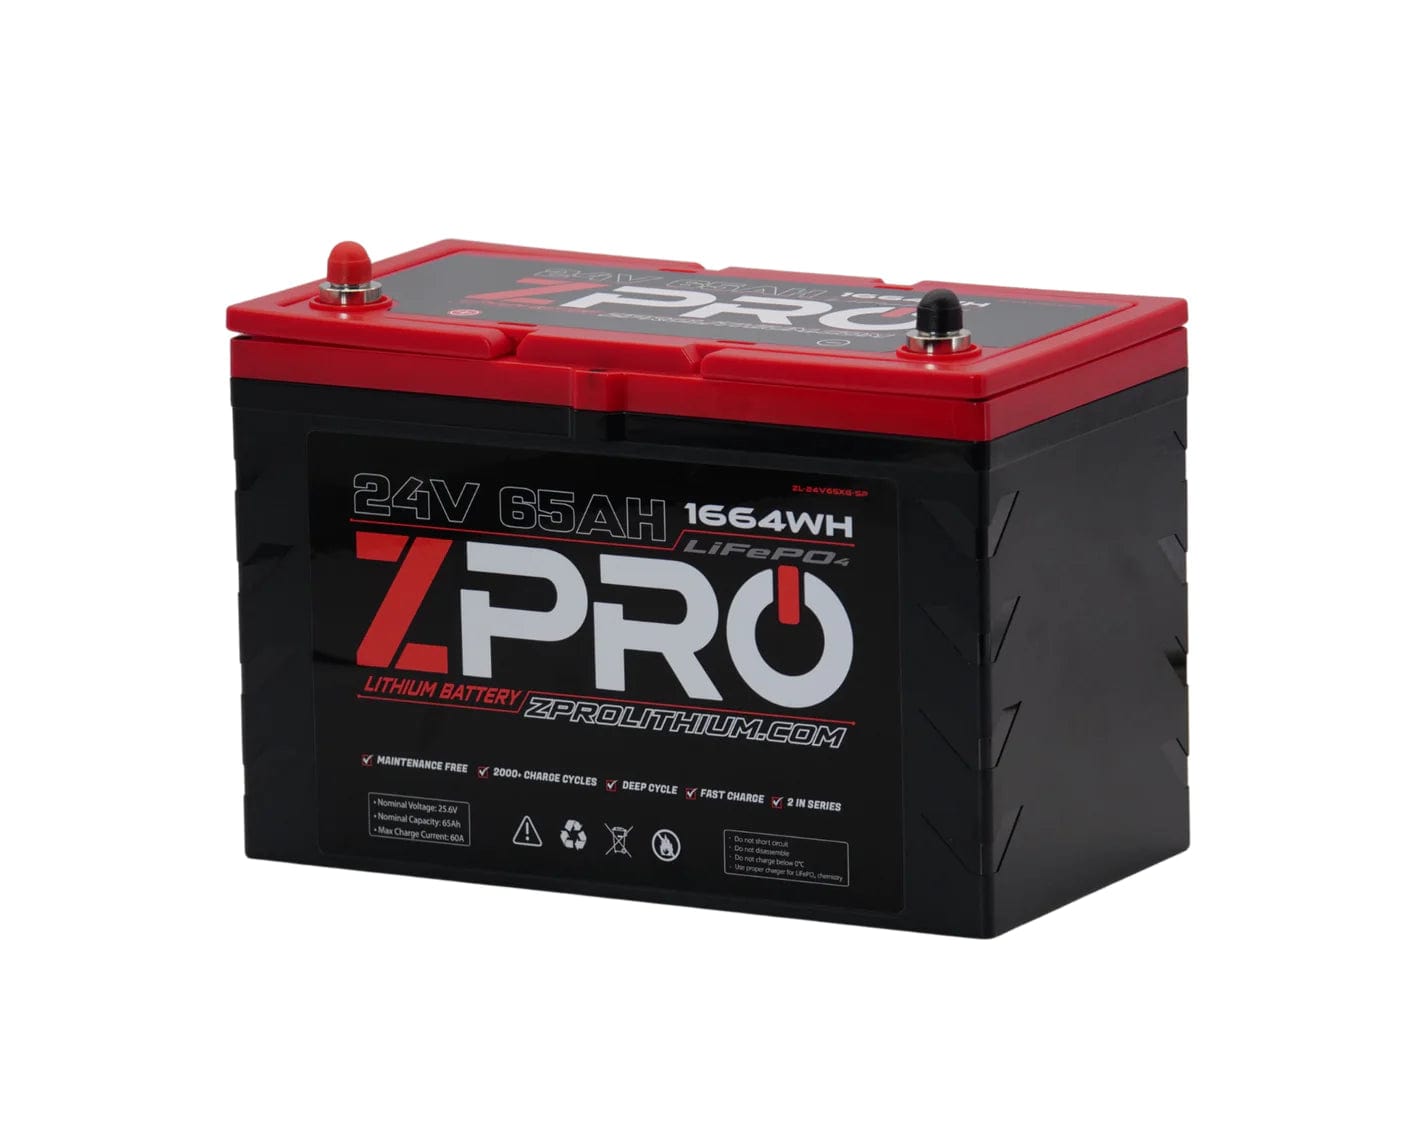 ZPro 24v 65ah Lithium Battery